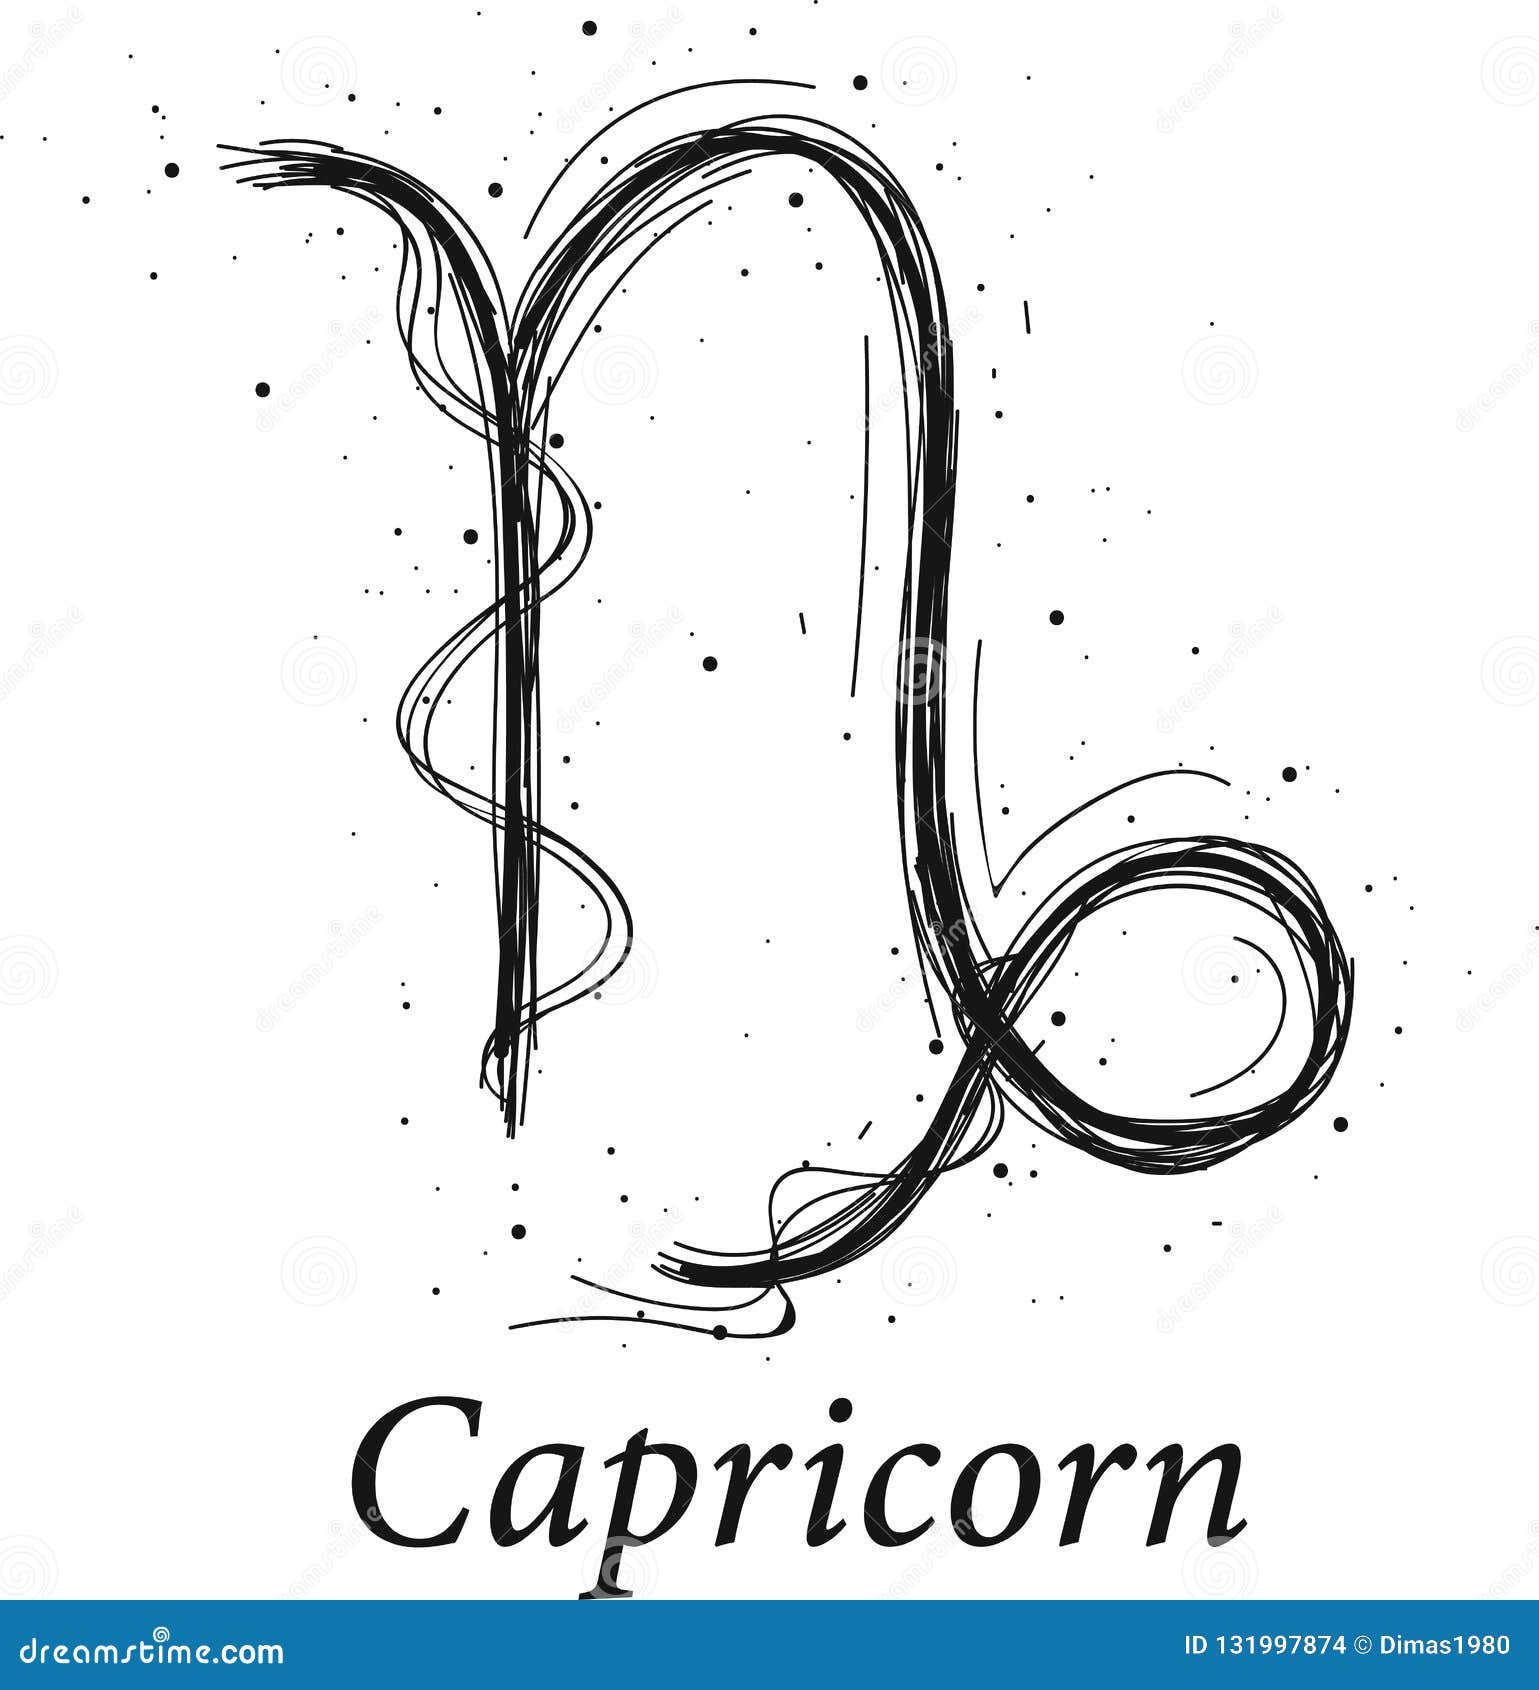 Capricorn Astrology Sign, Hand Drawn Horoscope Stock Vector ...